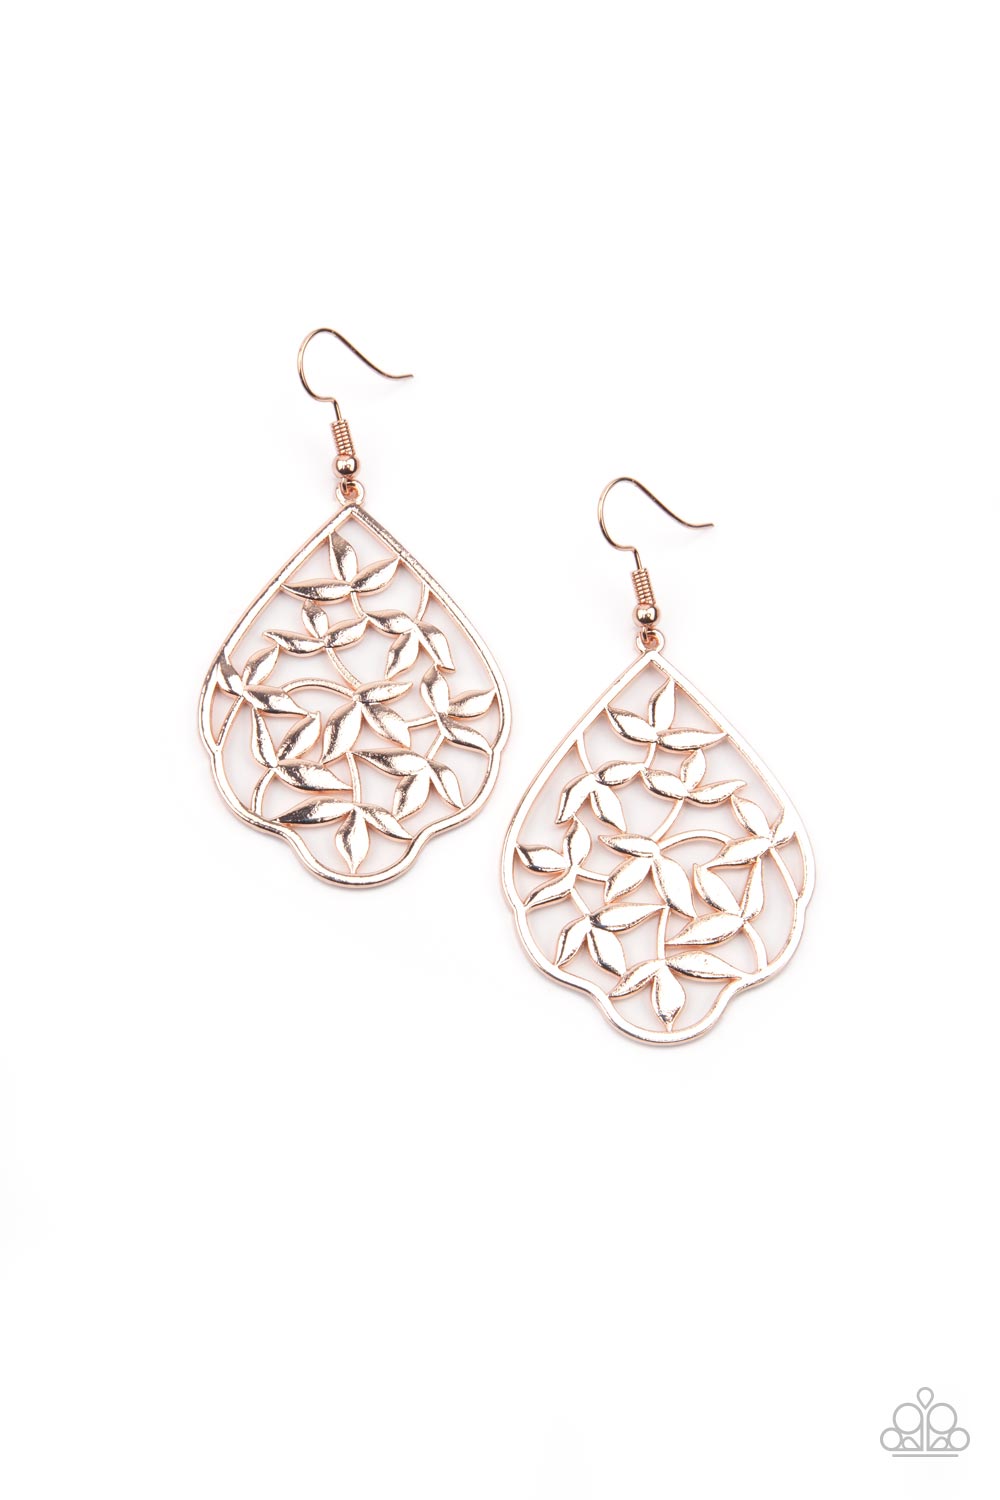 Taj Mahal Gardens - Rose Gold Earrings - Princess Glam Shop